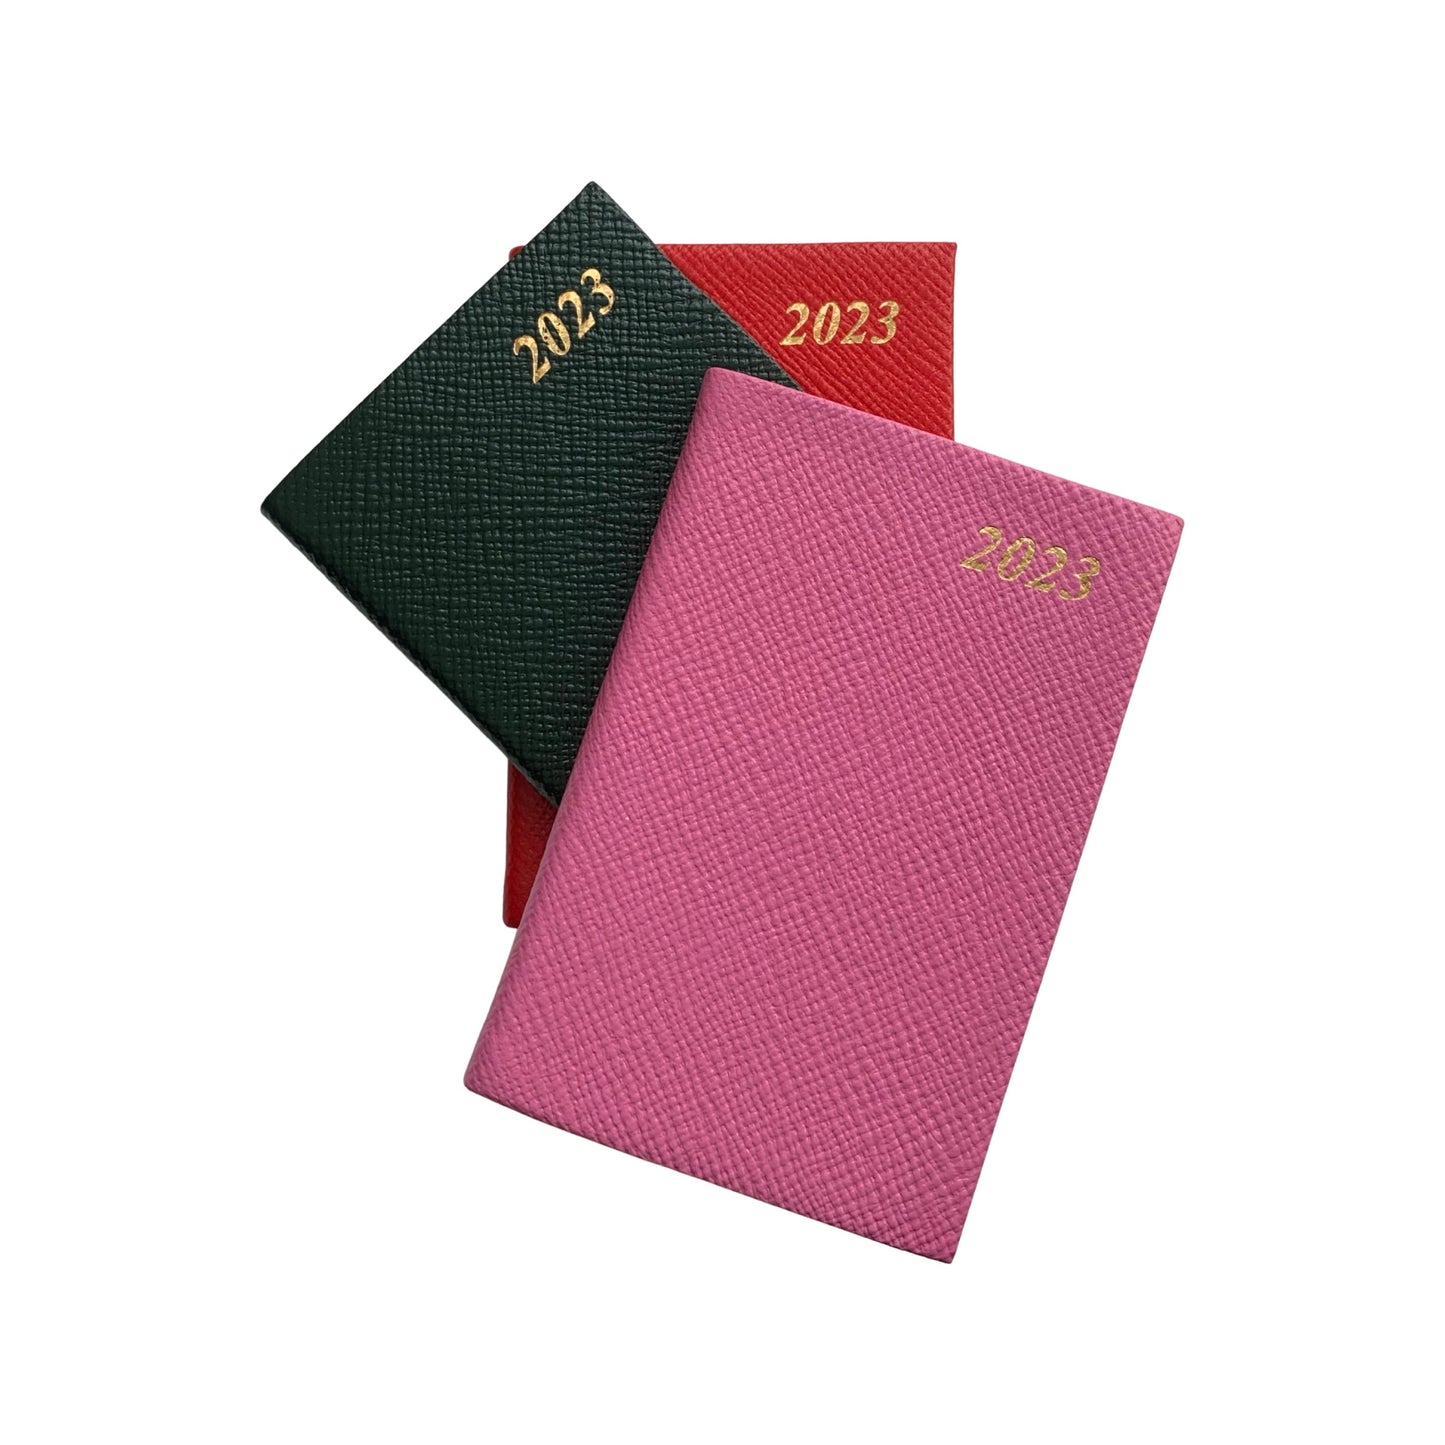 YEAR 2023 CROSSGRAIN Leather Pocket Calendar Book | 5 x 3" | D753L